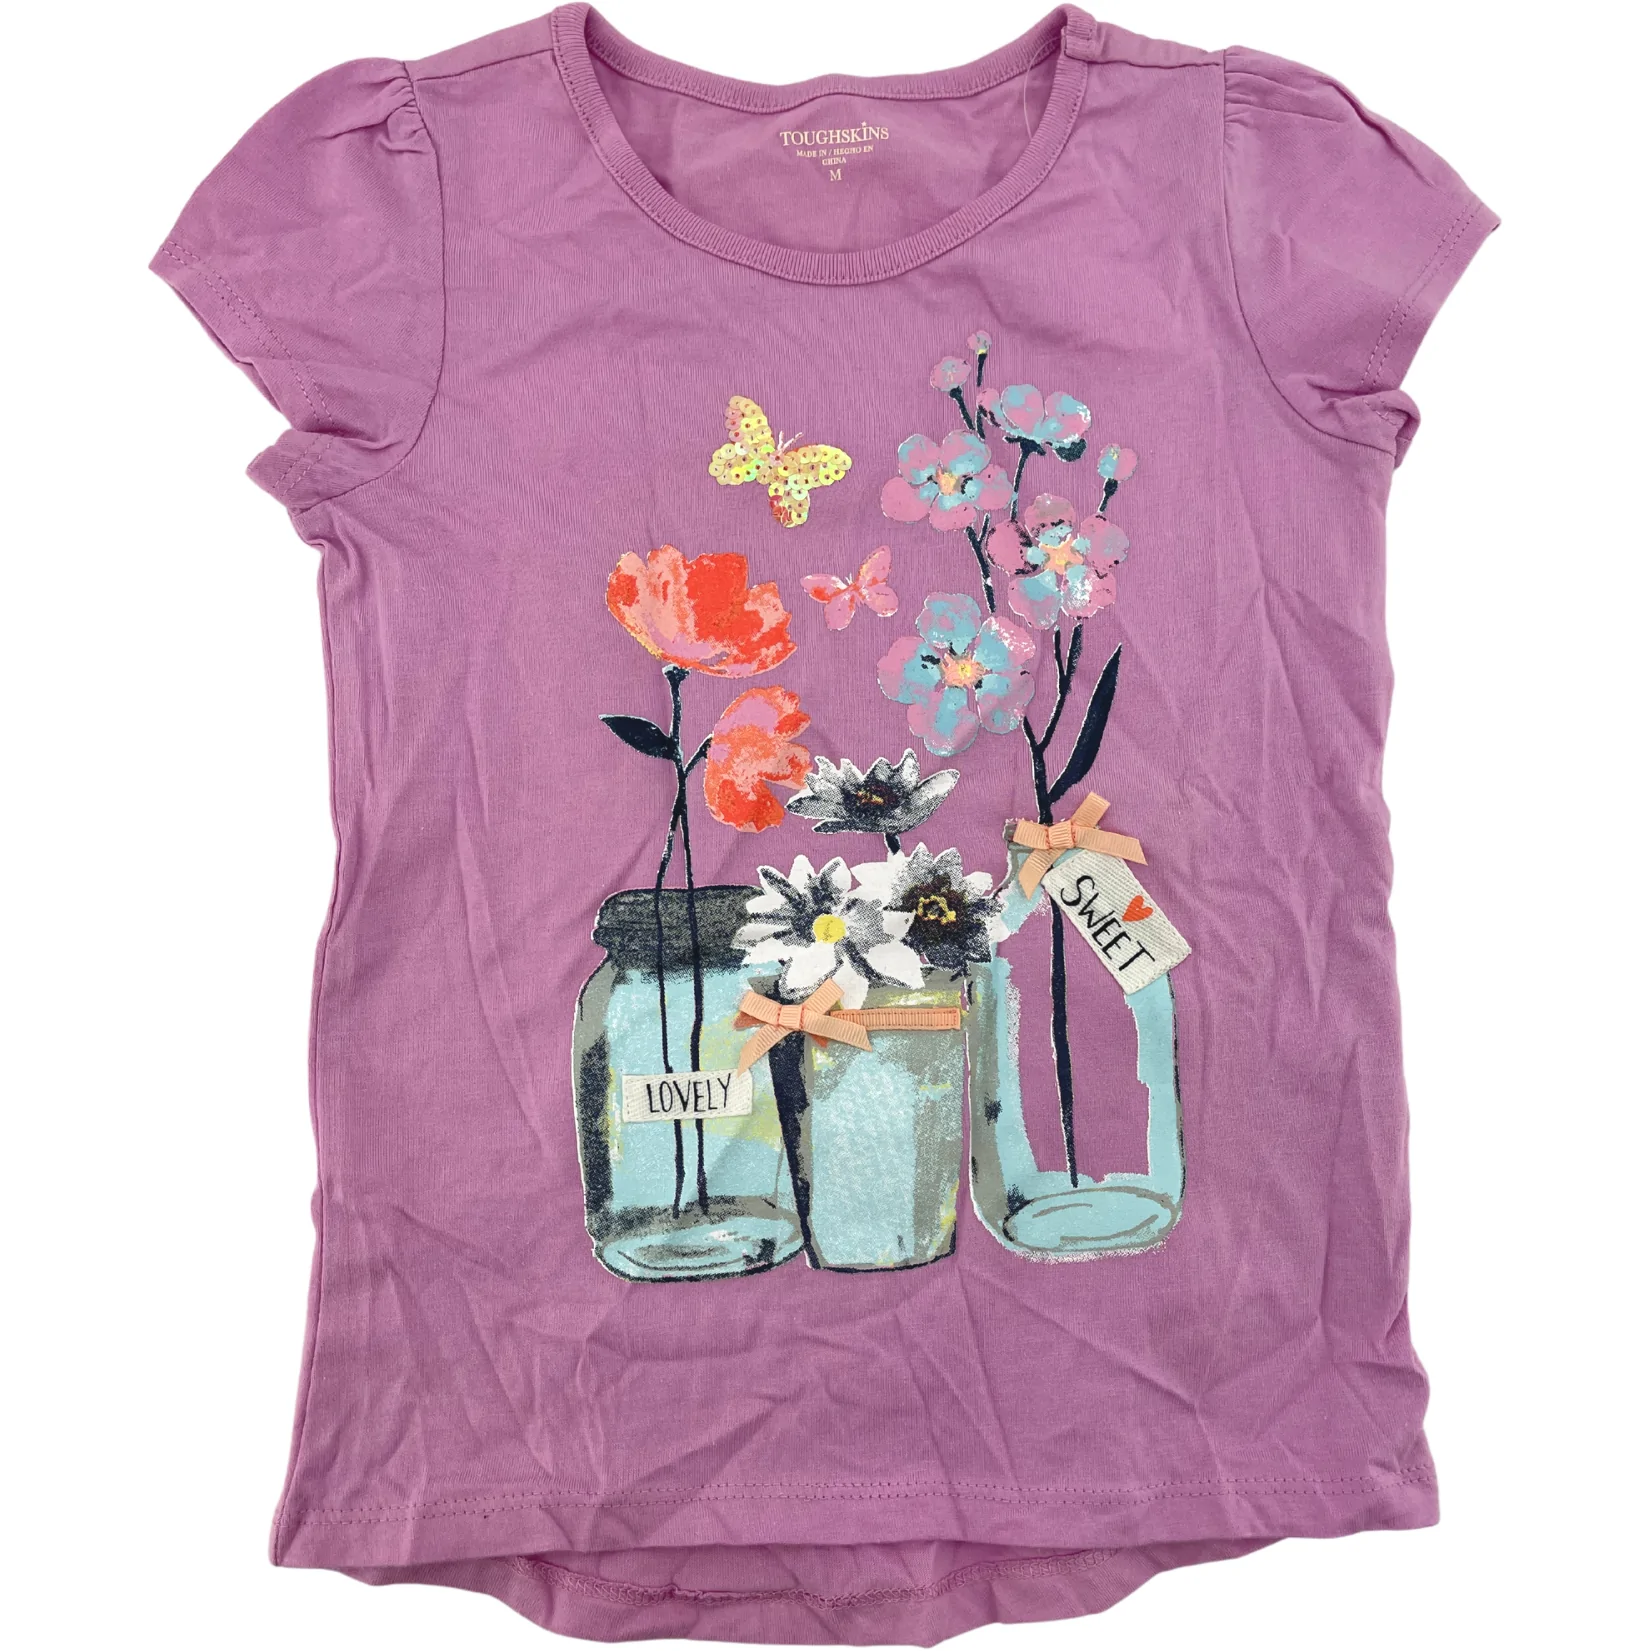 Toughskins Girl's T-Shirt / Flower Theme / Purple / Size Medium